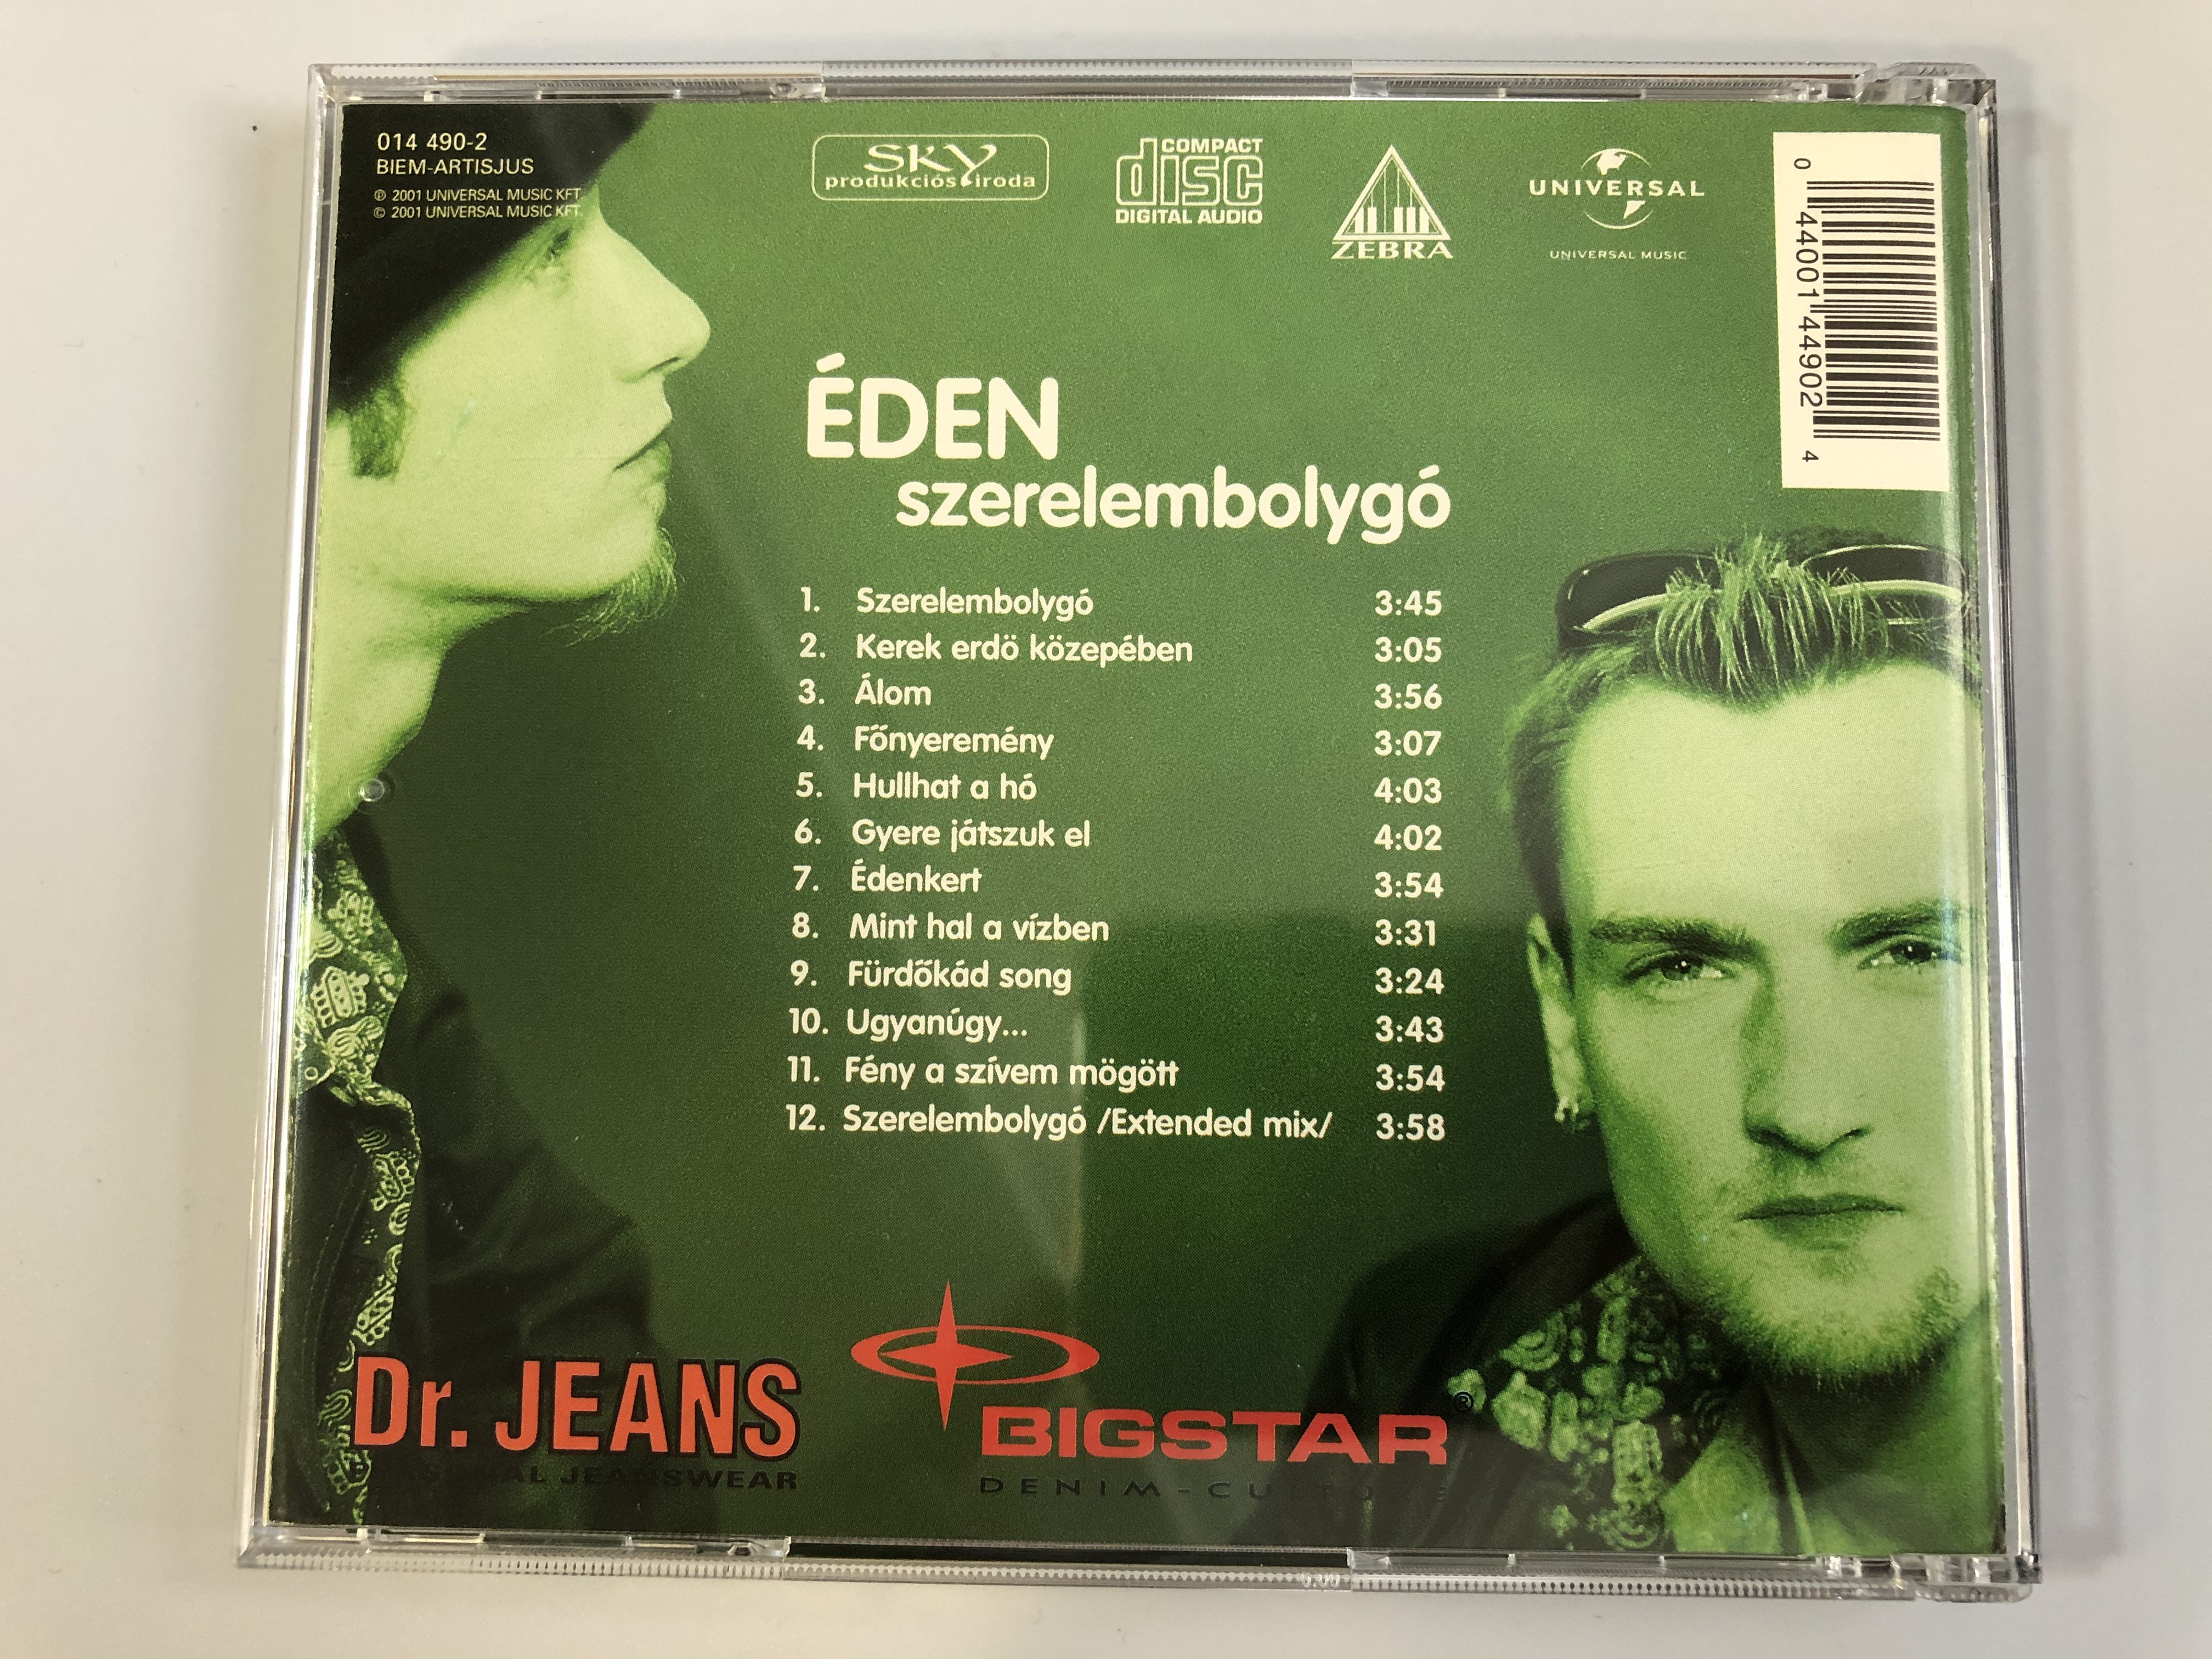 den-szerelembolyg-zebra-audio-cd-2001-014-490-2-11-.jpg